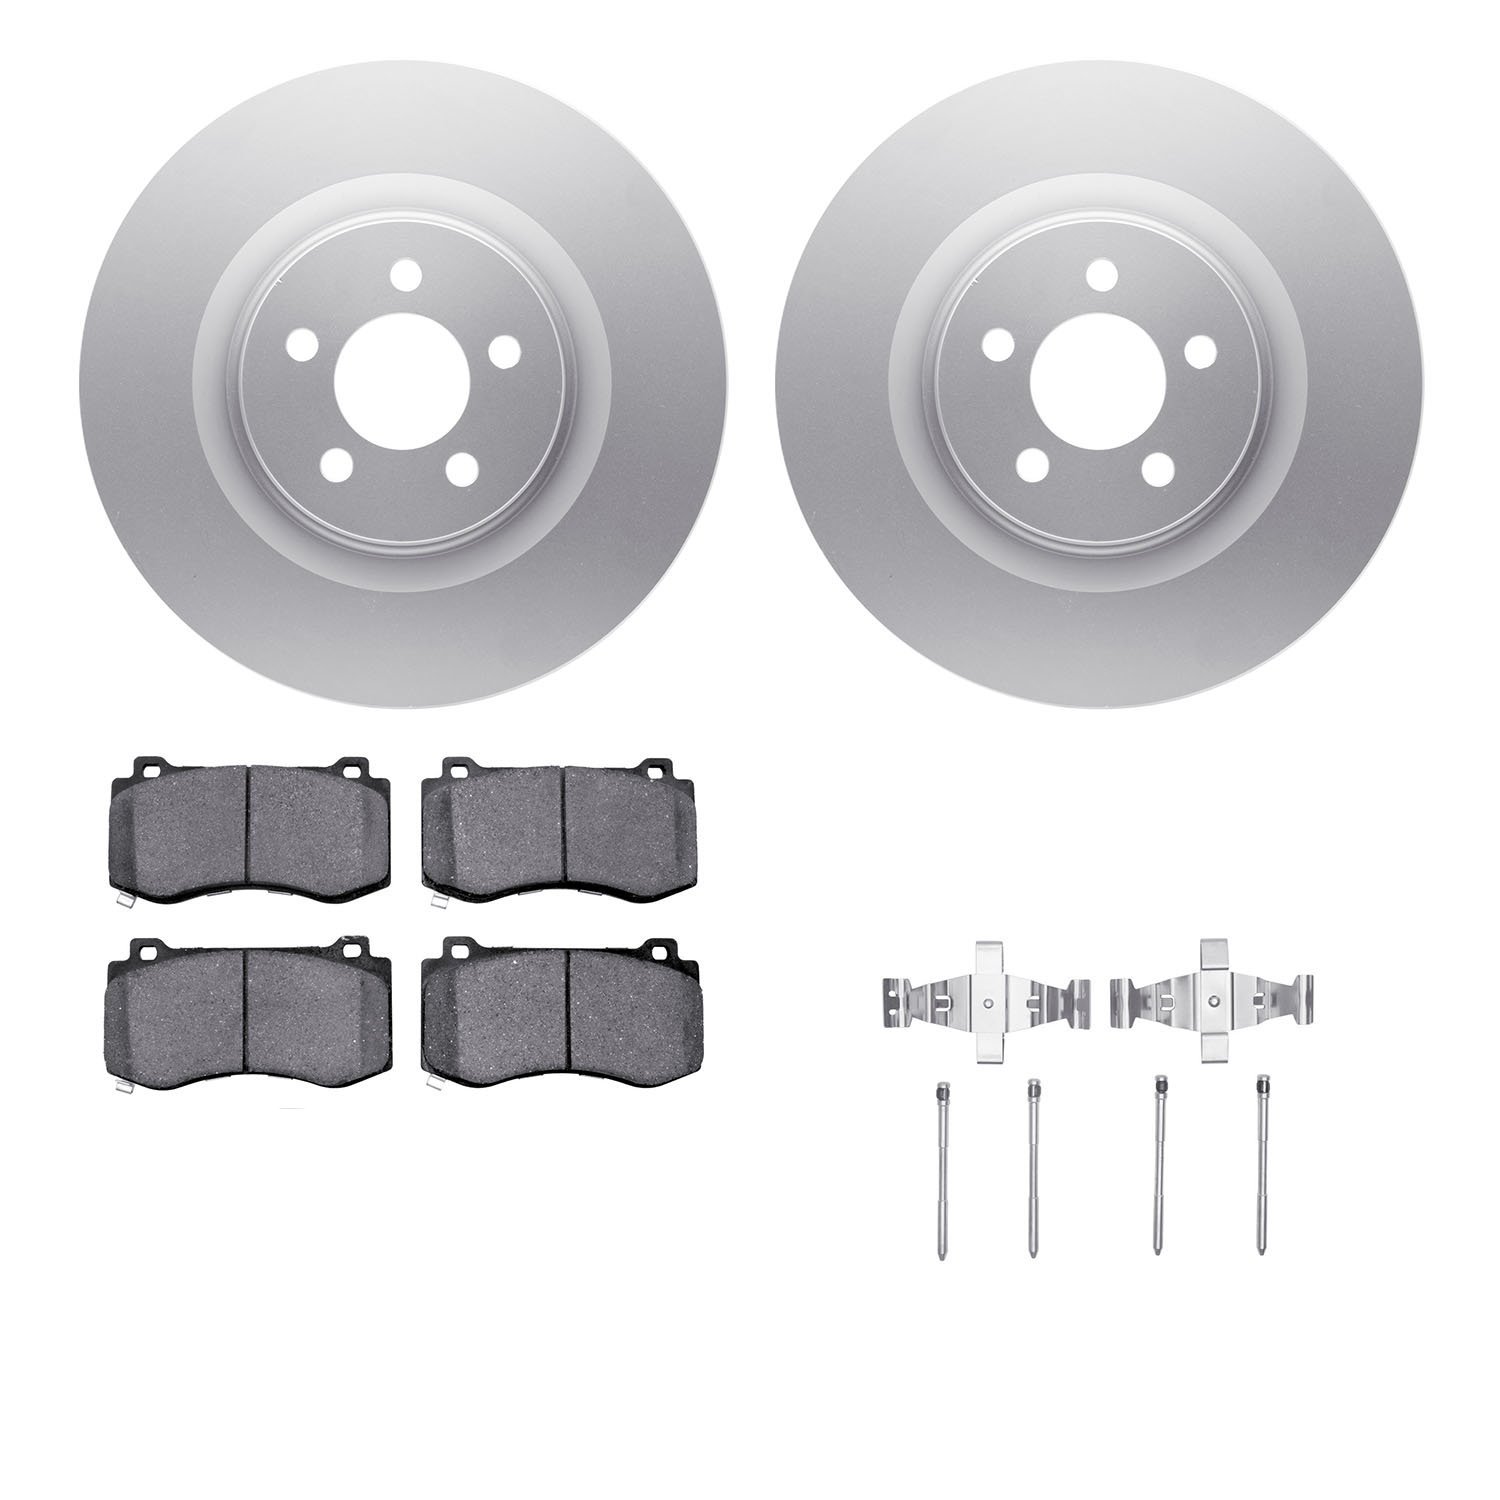 4412-39001 Geospec Brake Rotors with Ultimate-Duty Brake Pads & Hardware, Fits Select Mopar, Position: Front